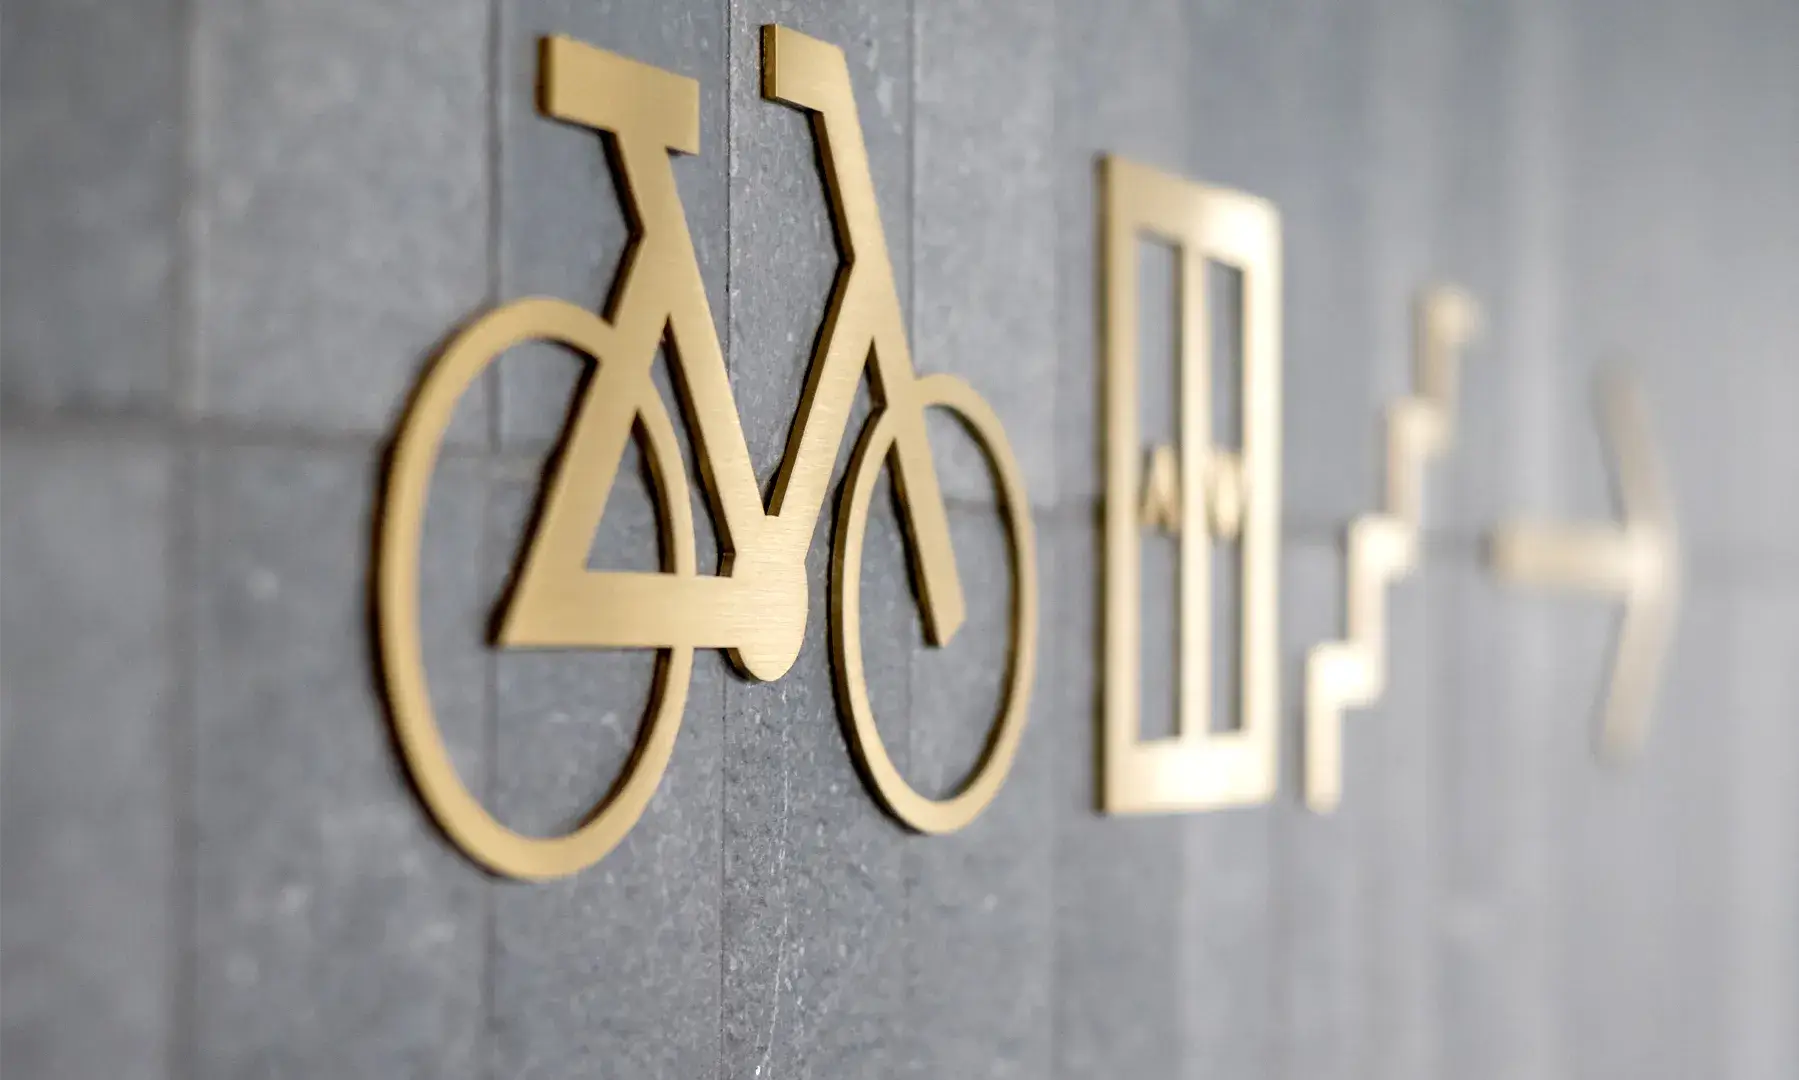 Pictograma metálico de señalización de bicicletas